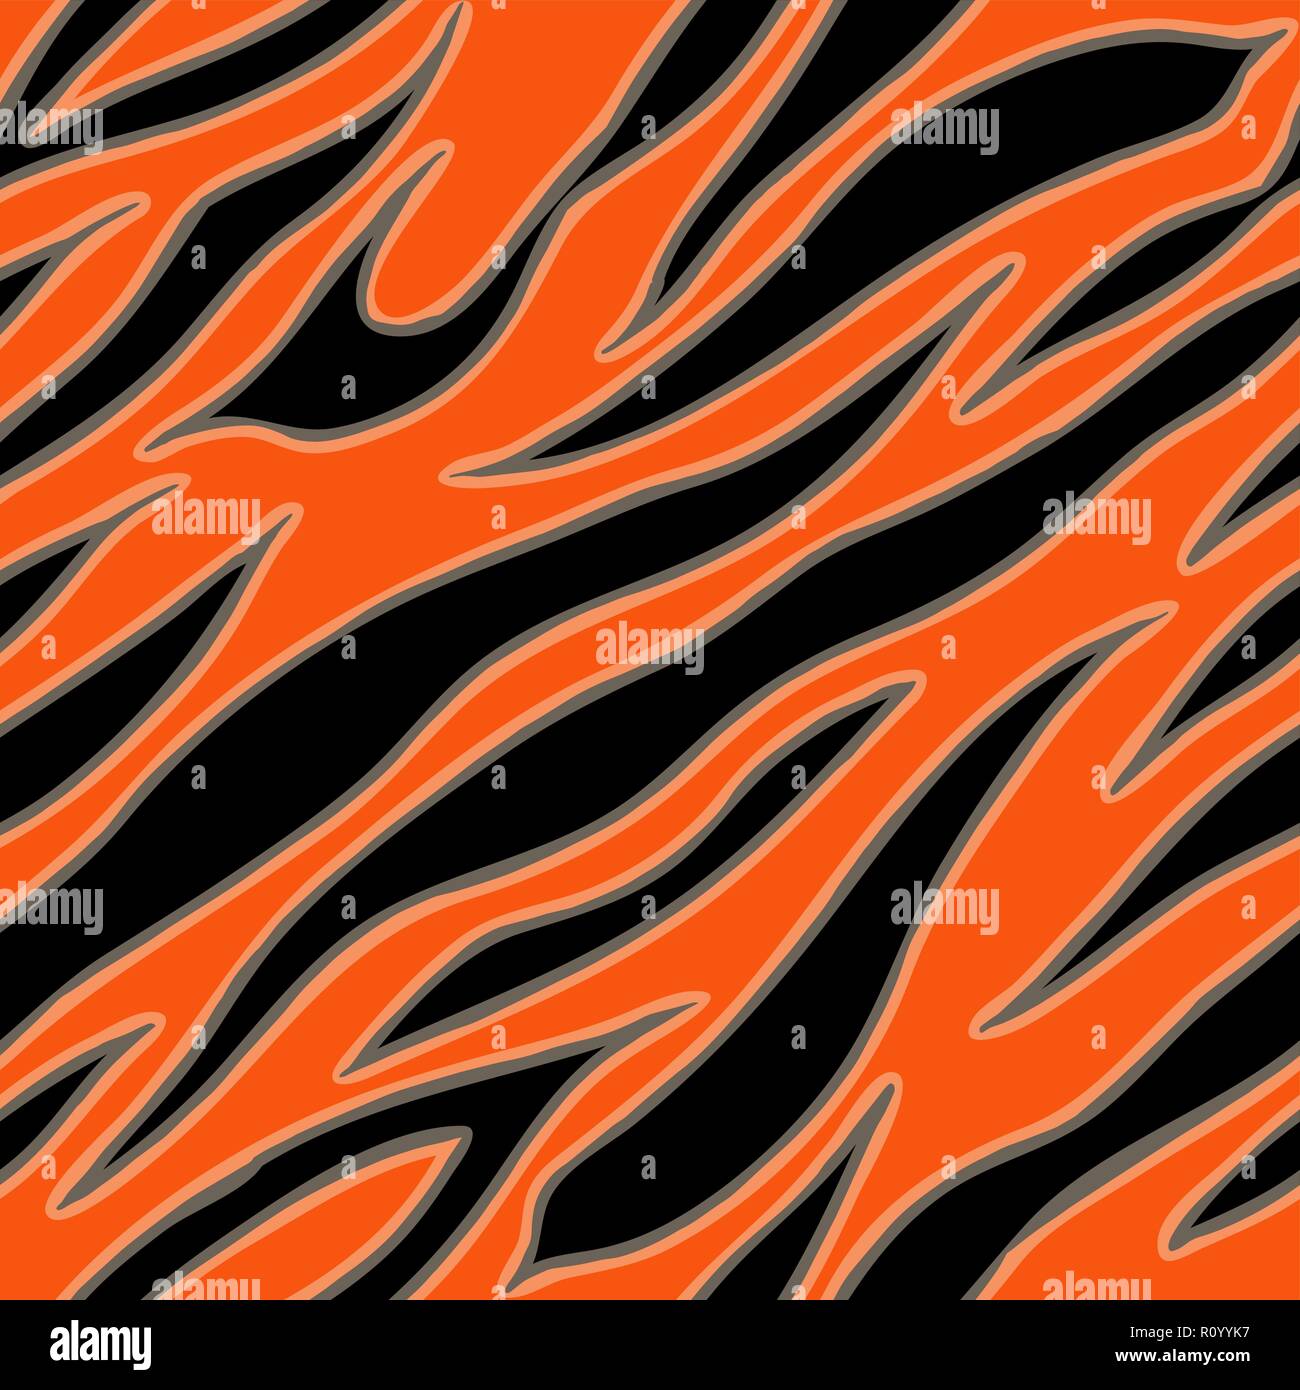 Tiger fur terracotta orange skin texture seamless Vector Image